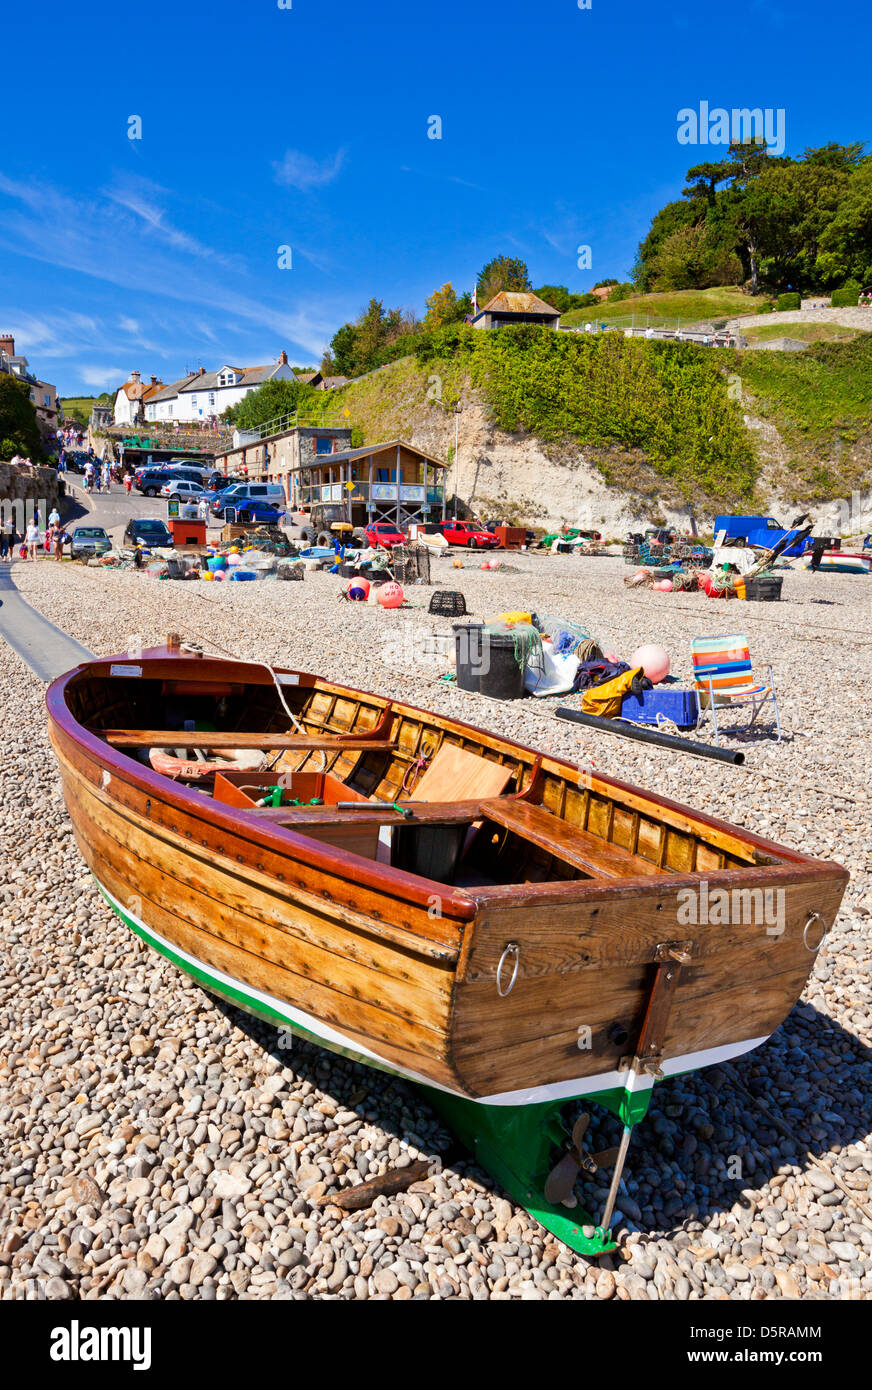 Barche di pescatori sulla spiaggia di birra Devon Jurassic Coast Inghilterra UK GB EU Europe Foto Stock